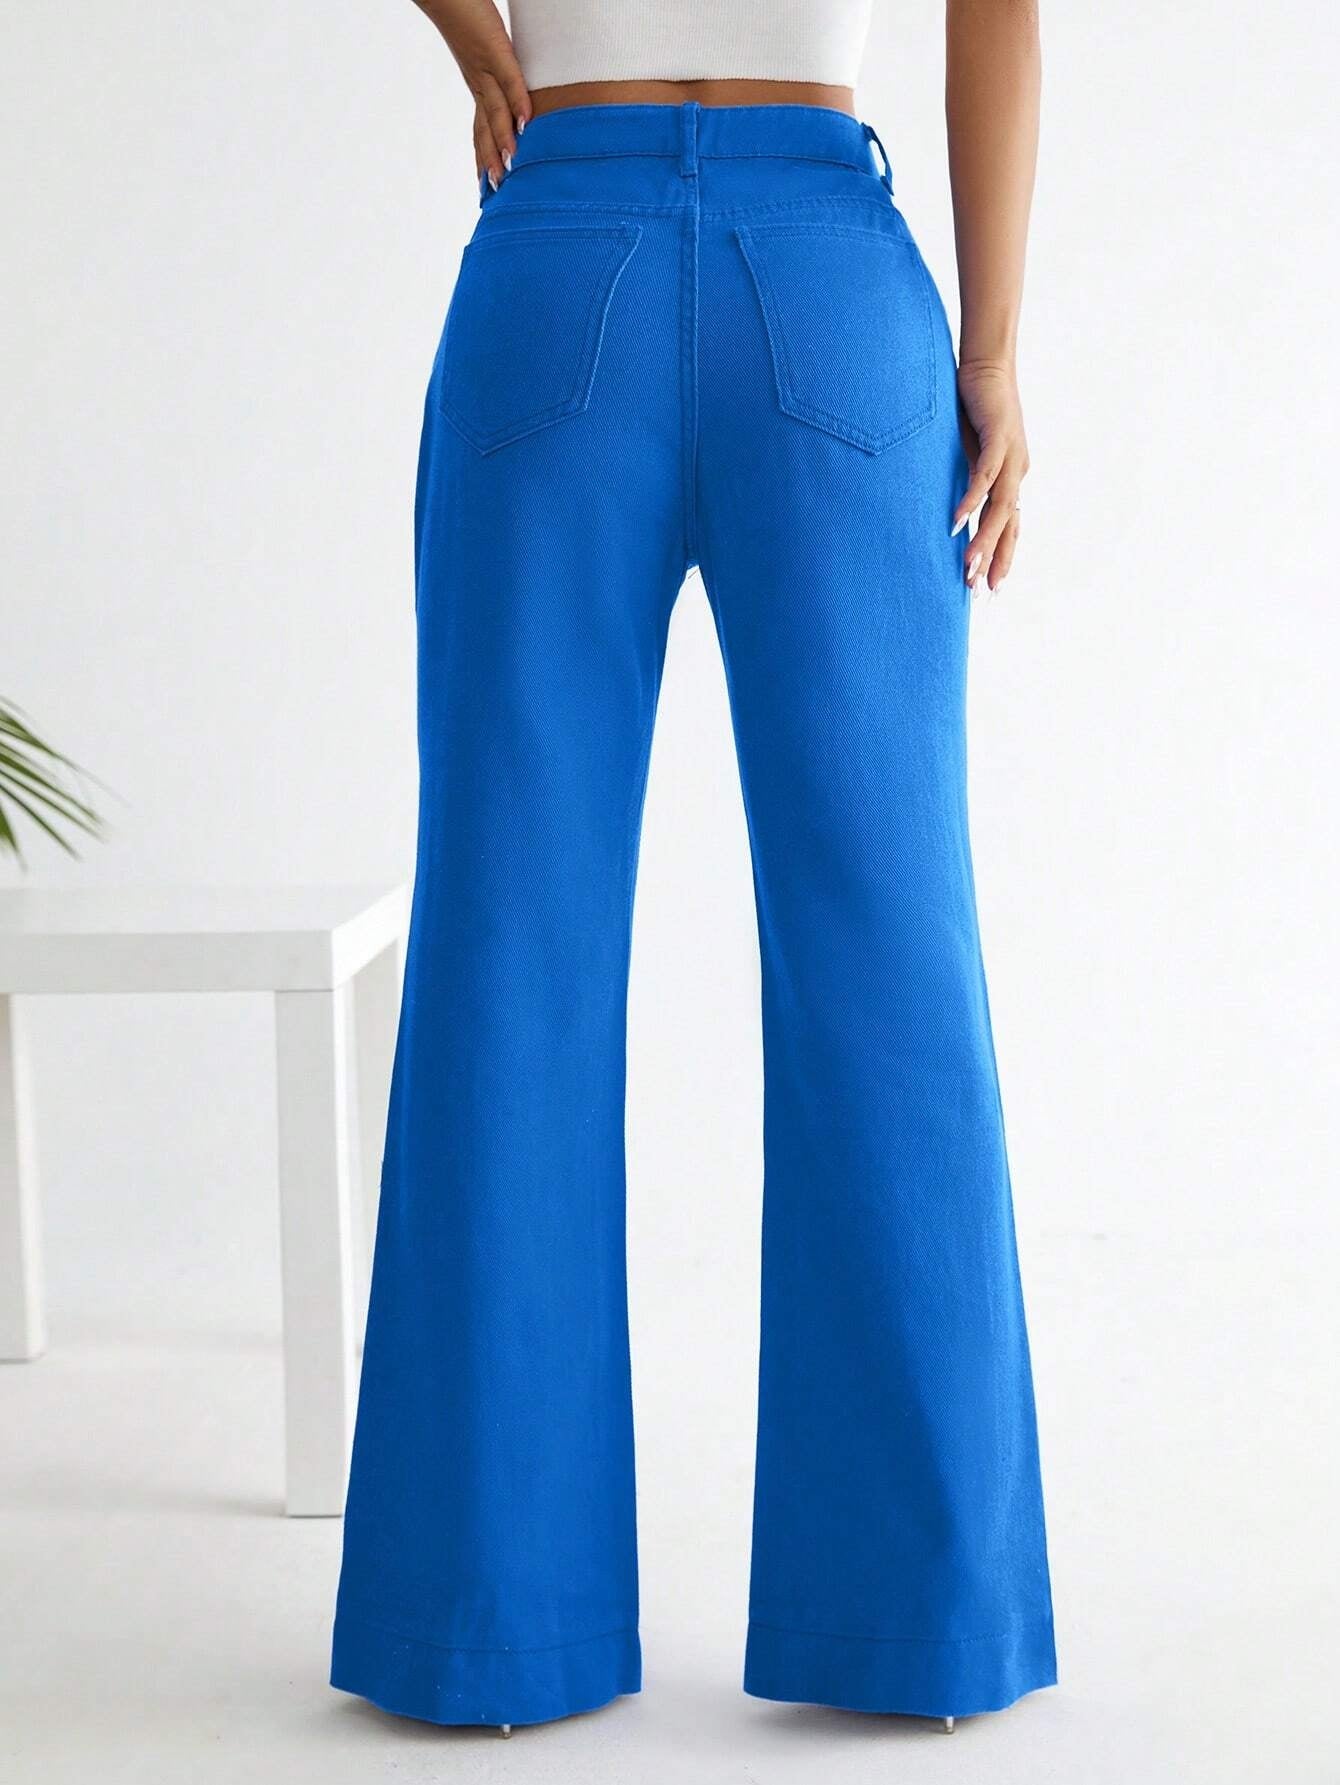 CM-BS759005 Women Preppy Seoul Style High Waist Flare Leg Jeans - Blue